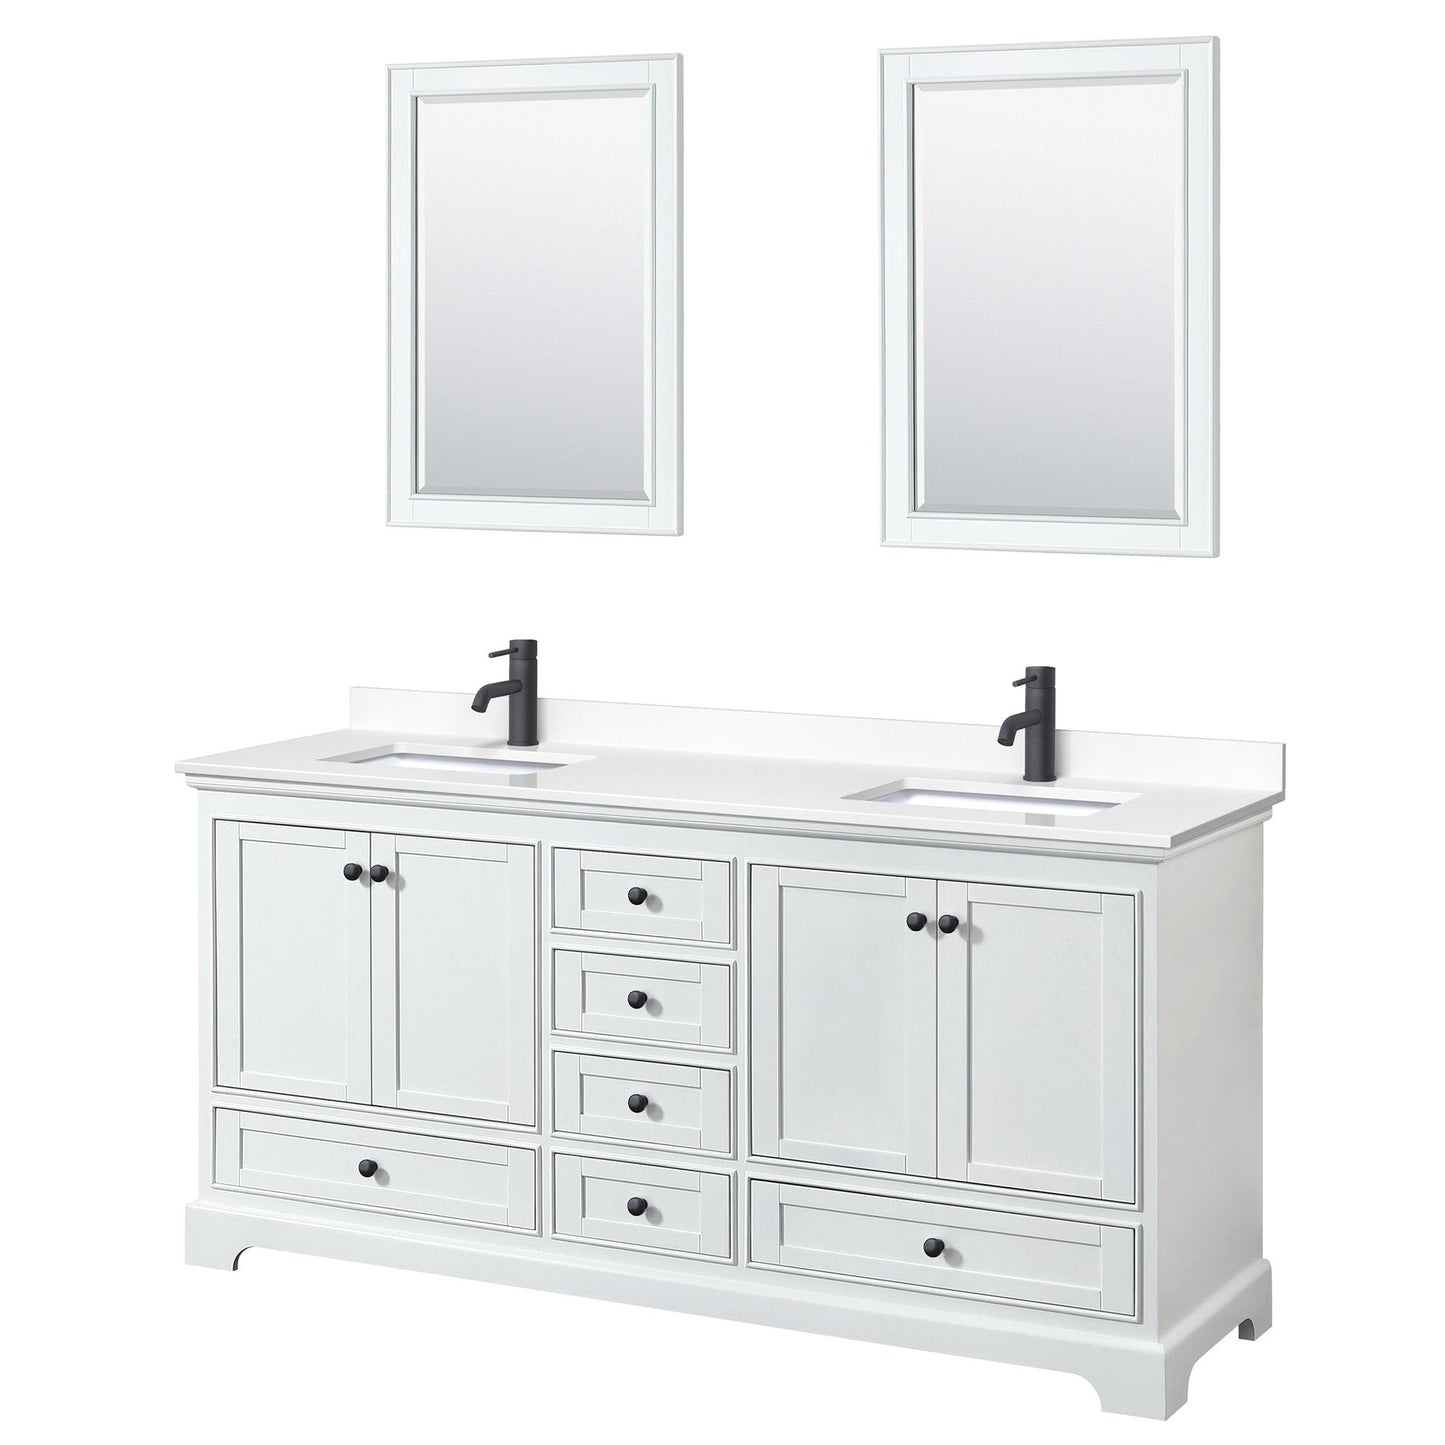 Deborah 72" Double Bathroom Vanity in White, White Cultured Marble Countertop, Undermount Square Sinks, Matte Black Trim, 24" Mirrors